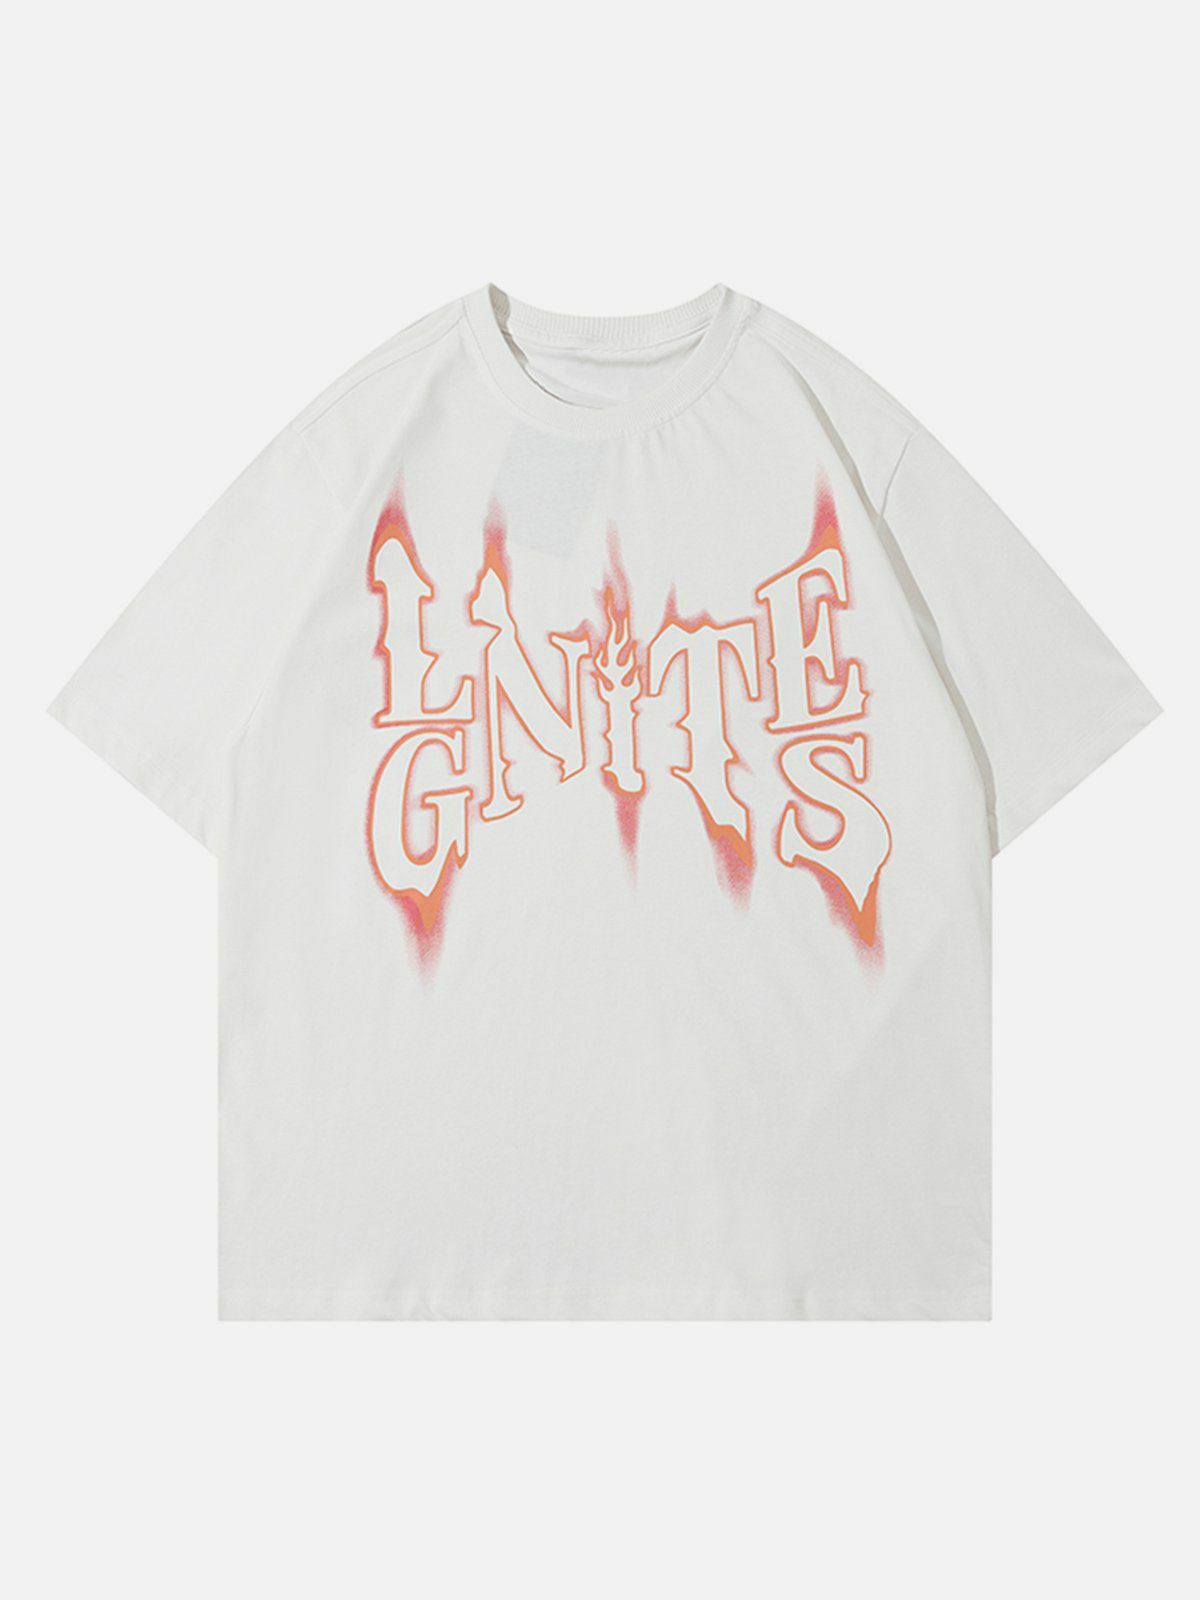 flame font print tee edgy & vibrant streetwear 7035